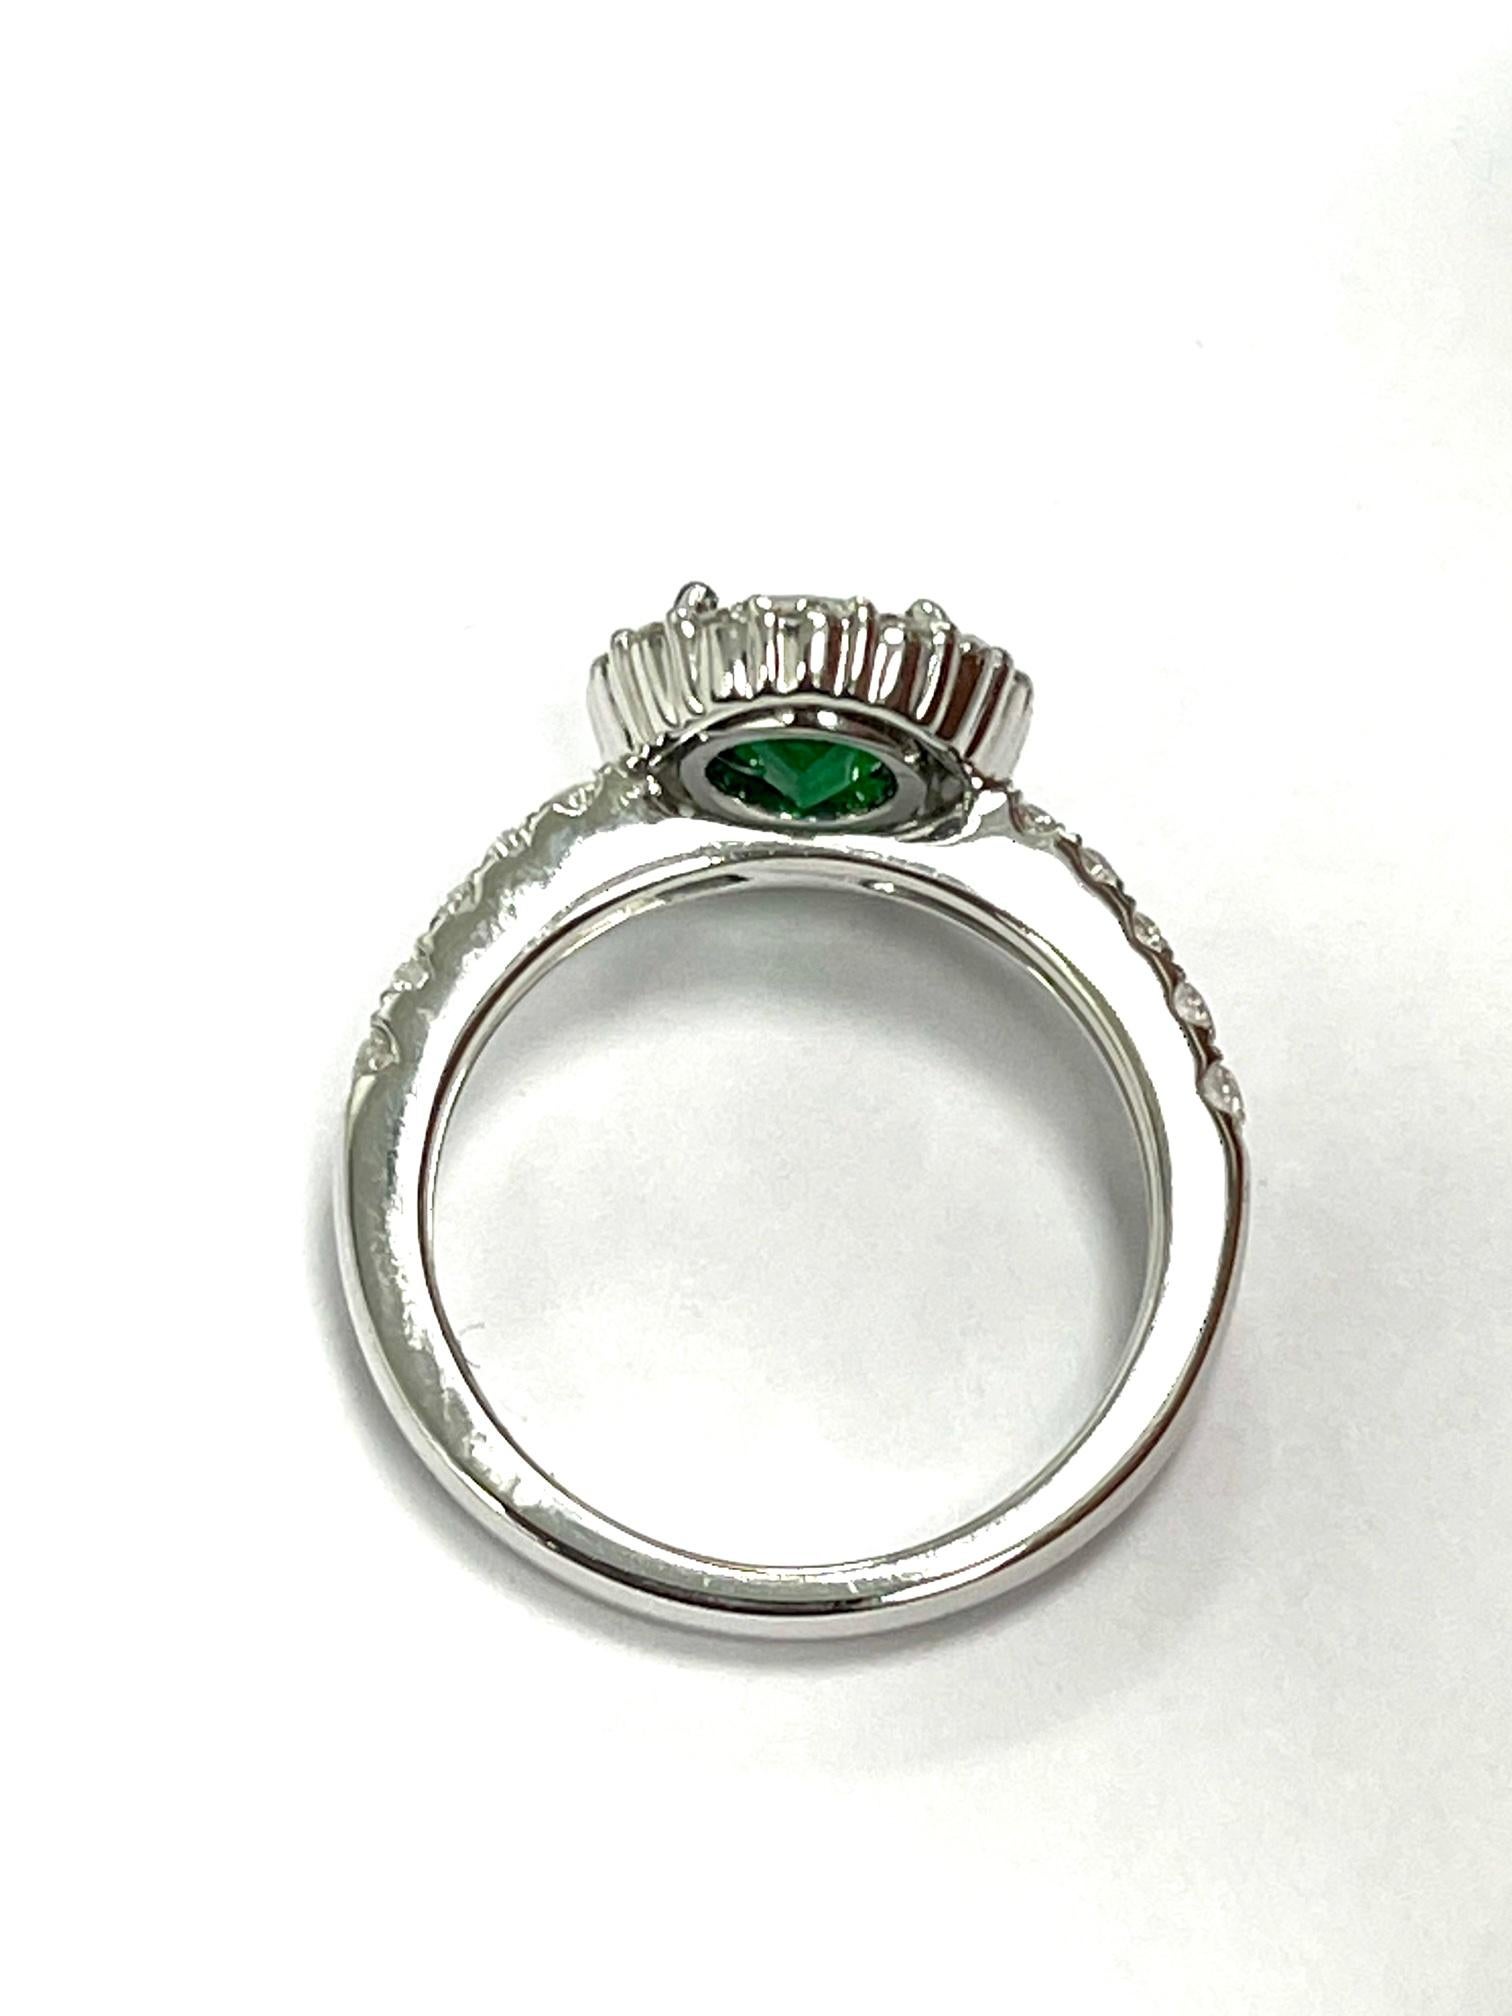 Oval Cut 1.48 Carat Emerald Diamond Ring For Sale